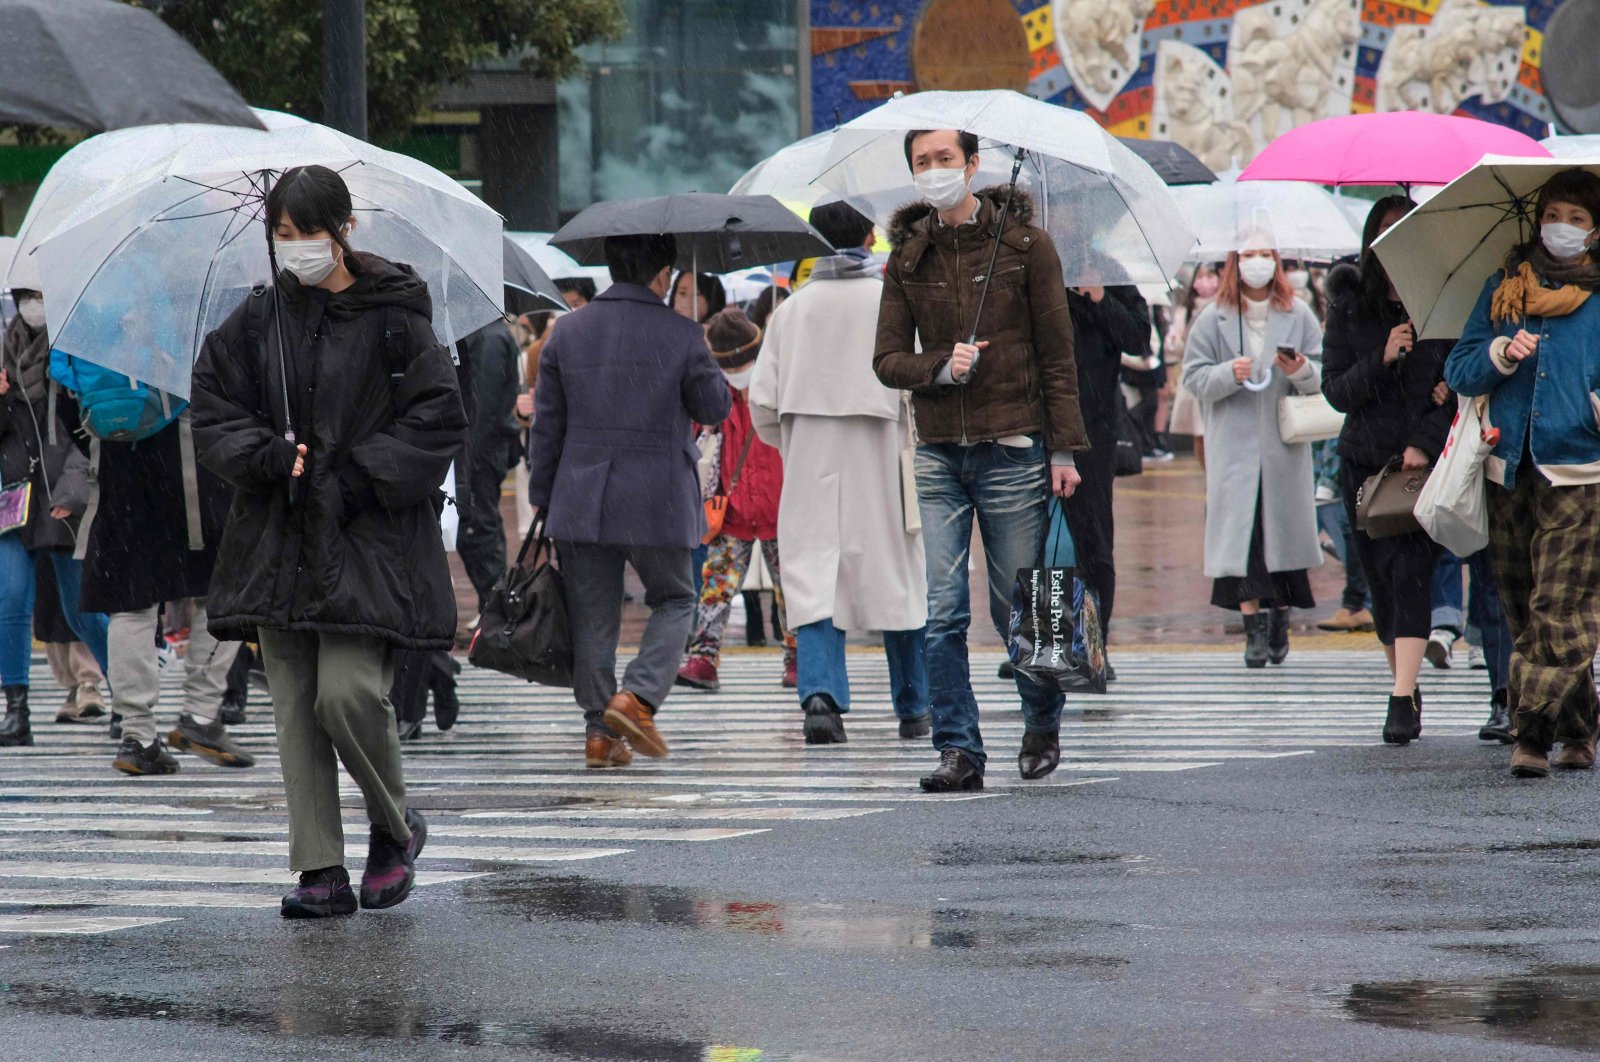 People walk at Shibuya crossing in rainy Tokyo, Japan, Feb. 13, 2022, amid the coronavirus pandemic. (AFP Photo)